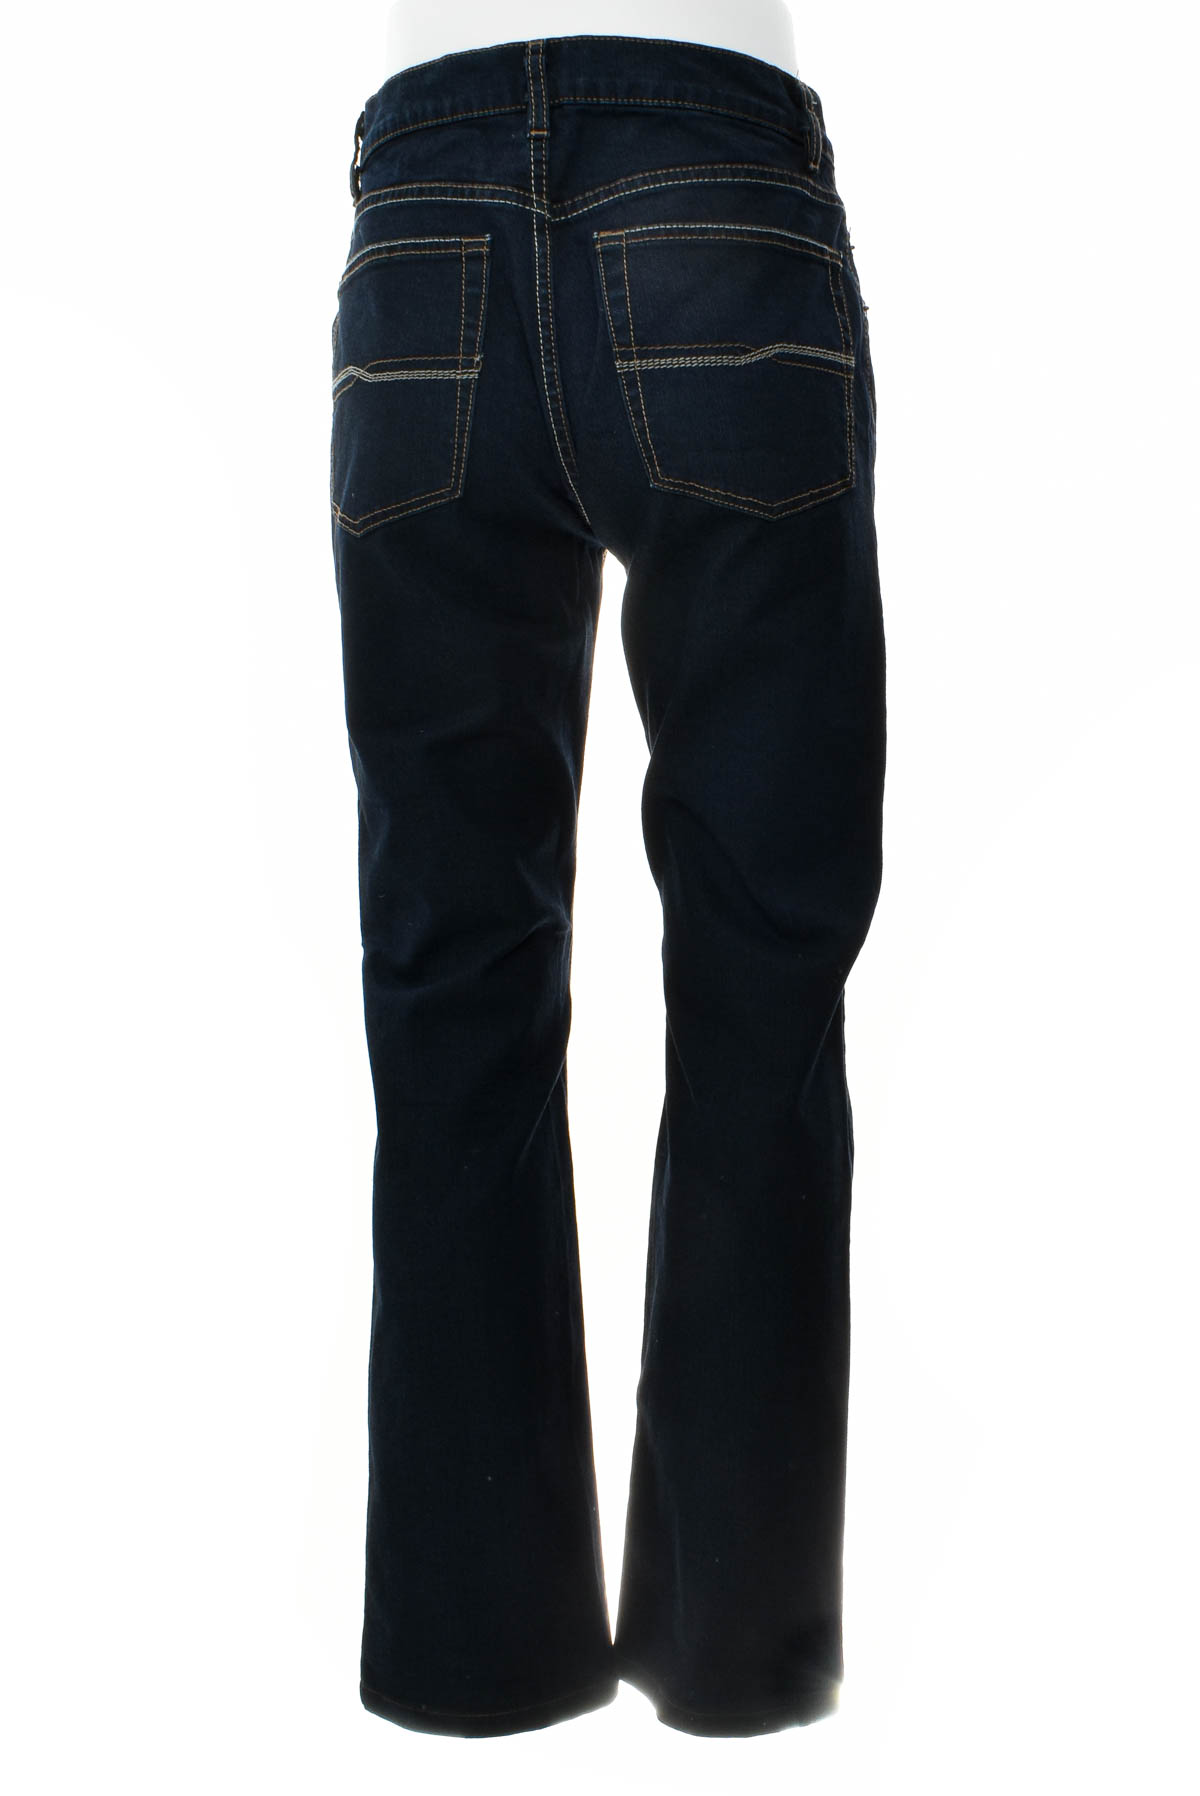 Men's jeans - Pioneer - 1